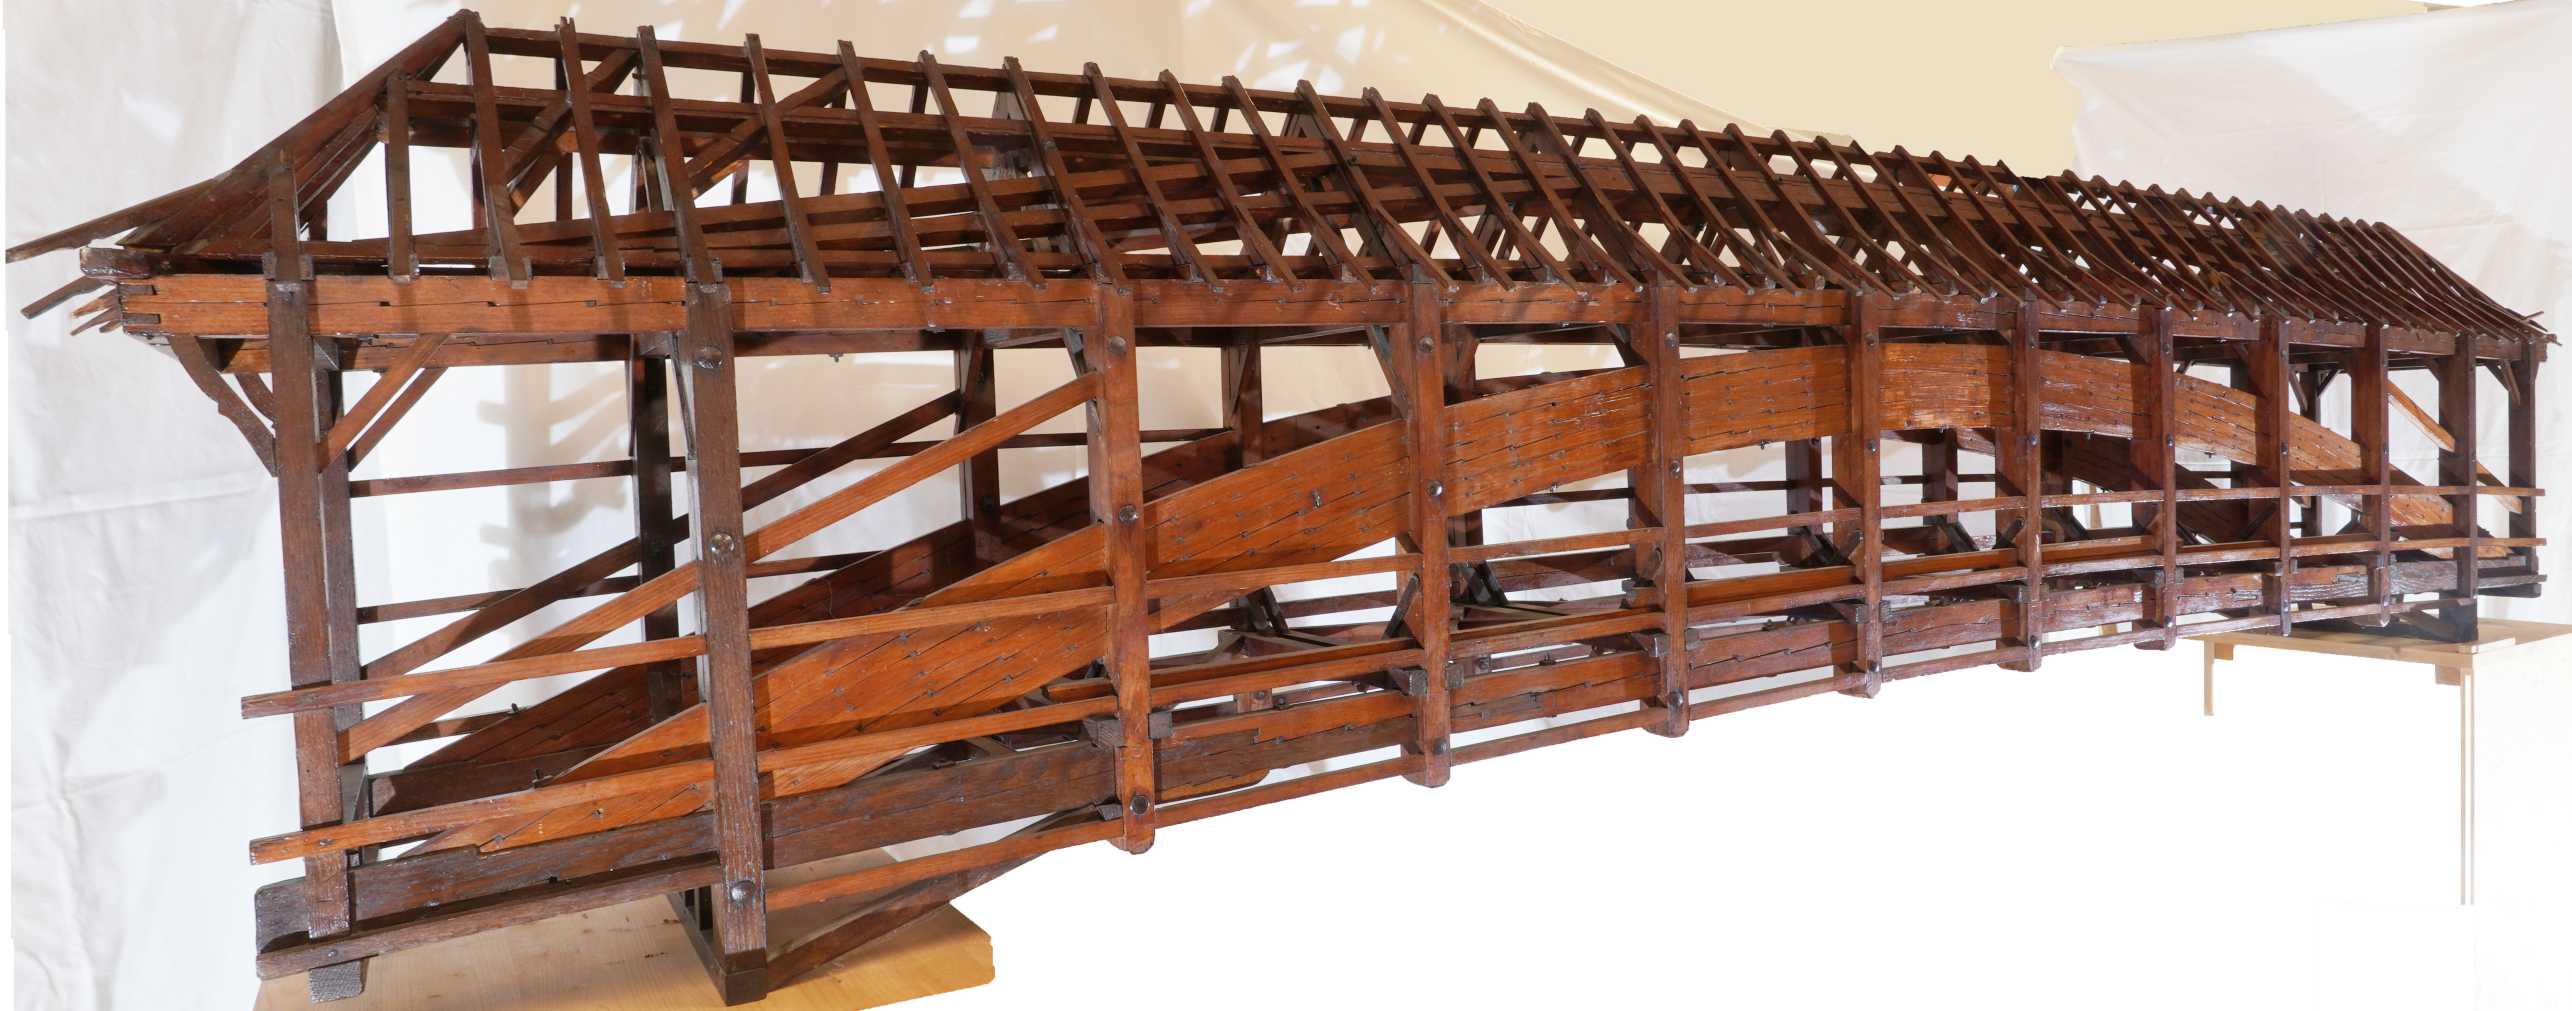 Bischofszell, Ortsmuseum, historical model of the Sitter Bridge.